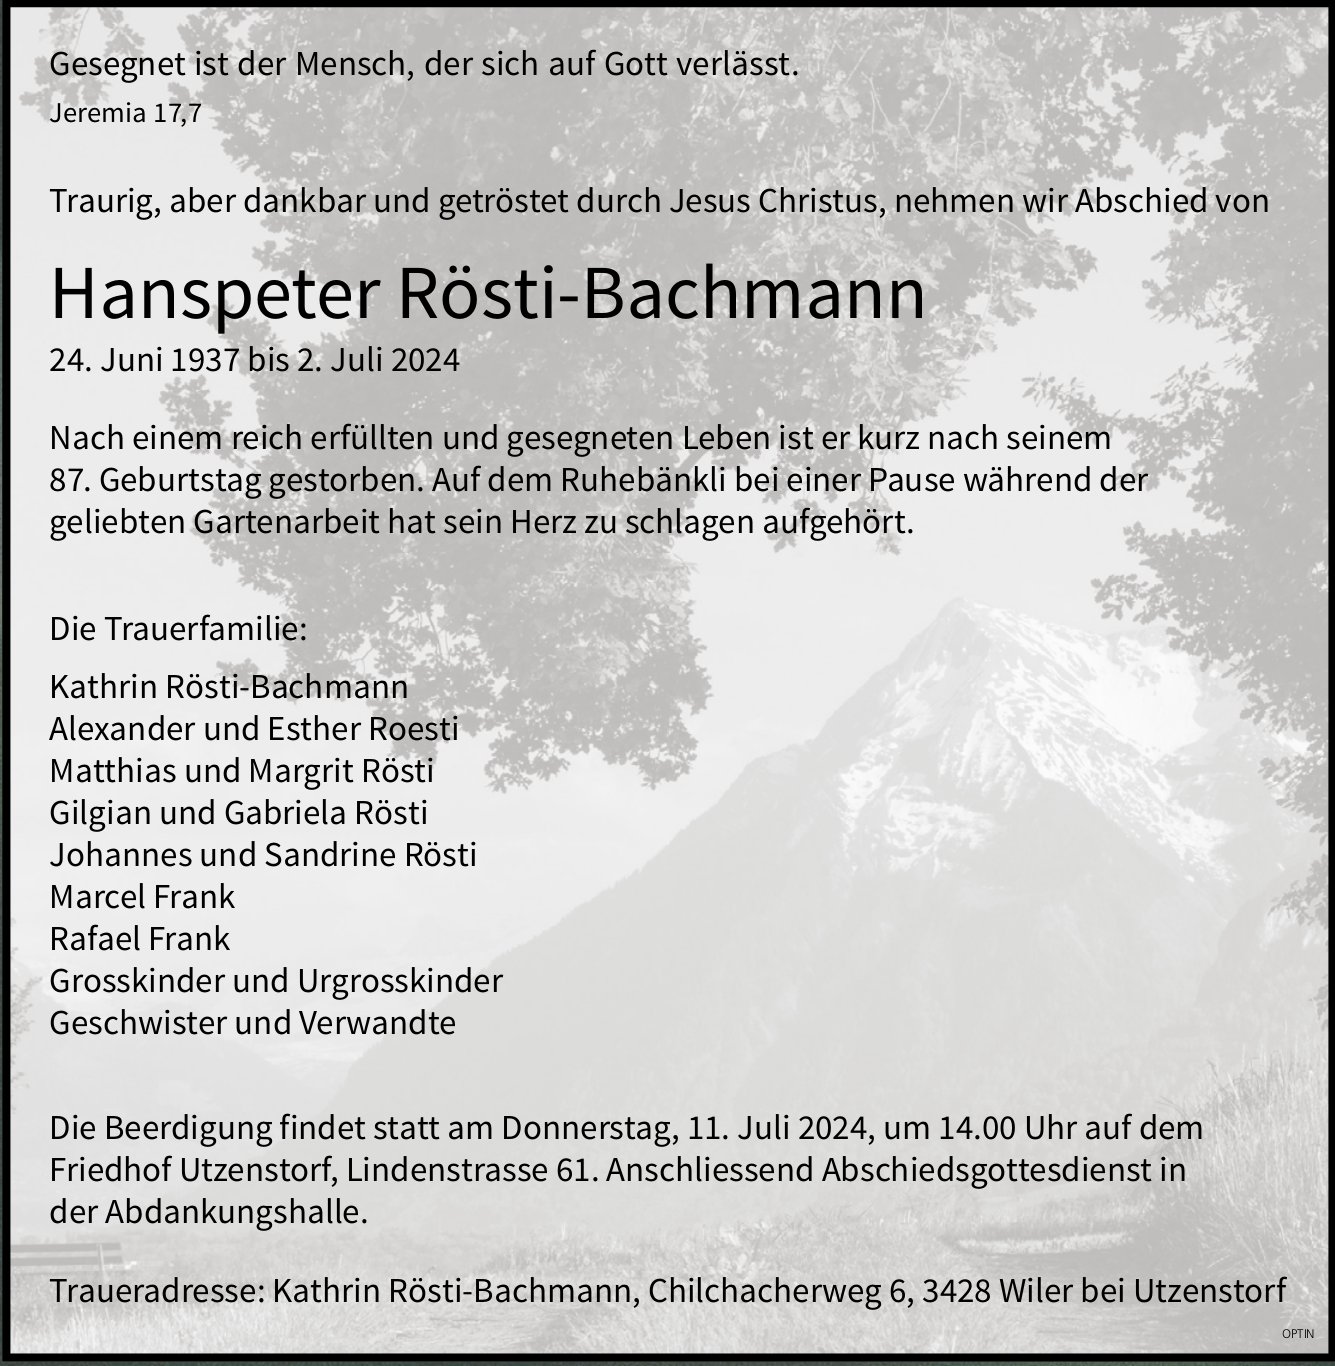 Hanspeter Rösti-Bachmann, Juli 2024 / TA